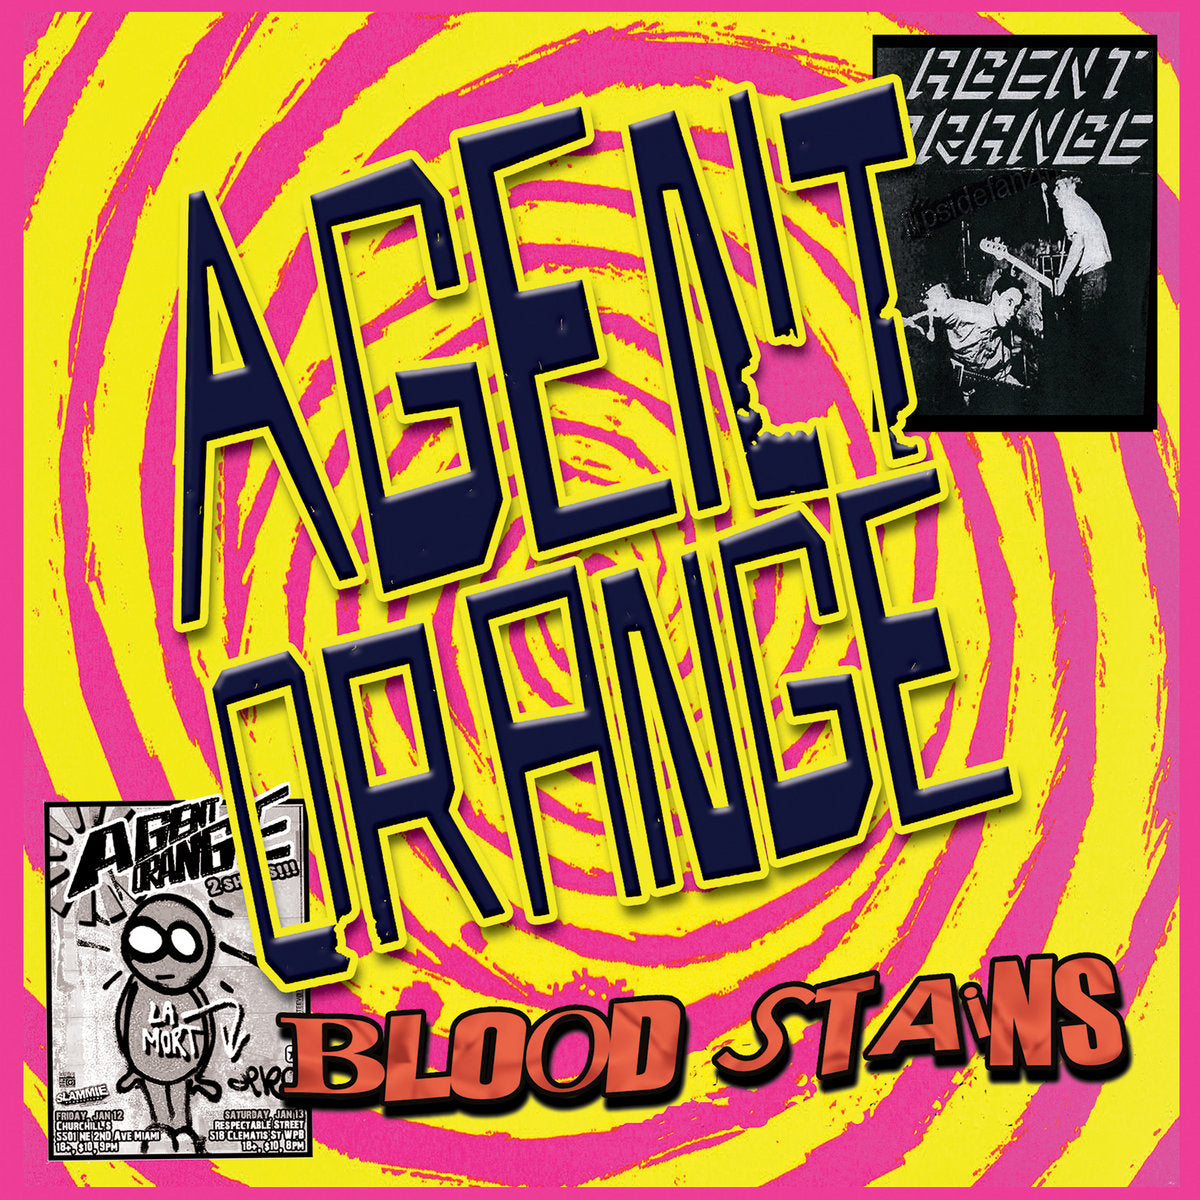 Agent Orange "Bloodstains" 7" (YELLOW Vinyl)